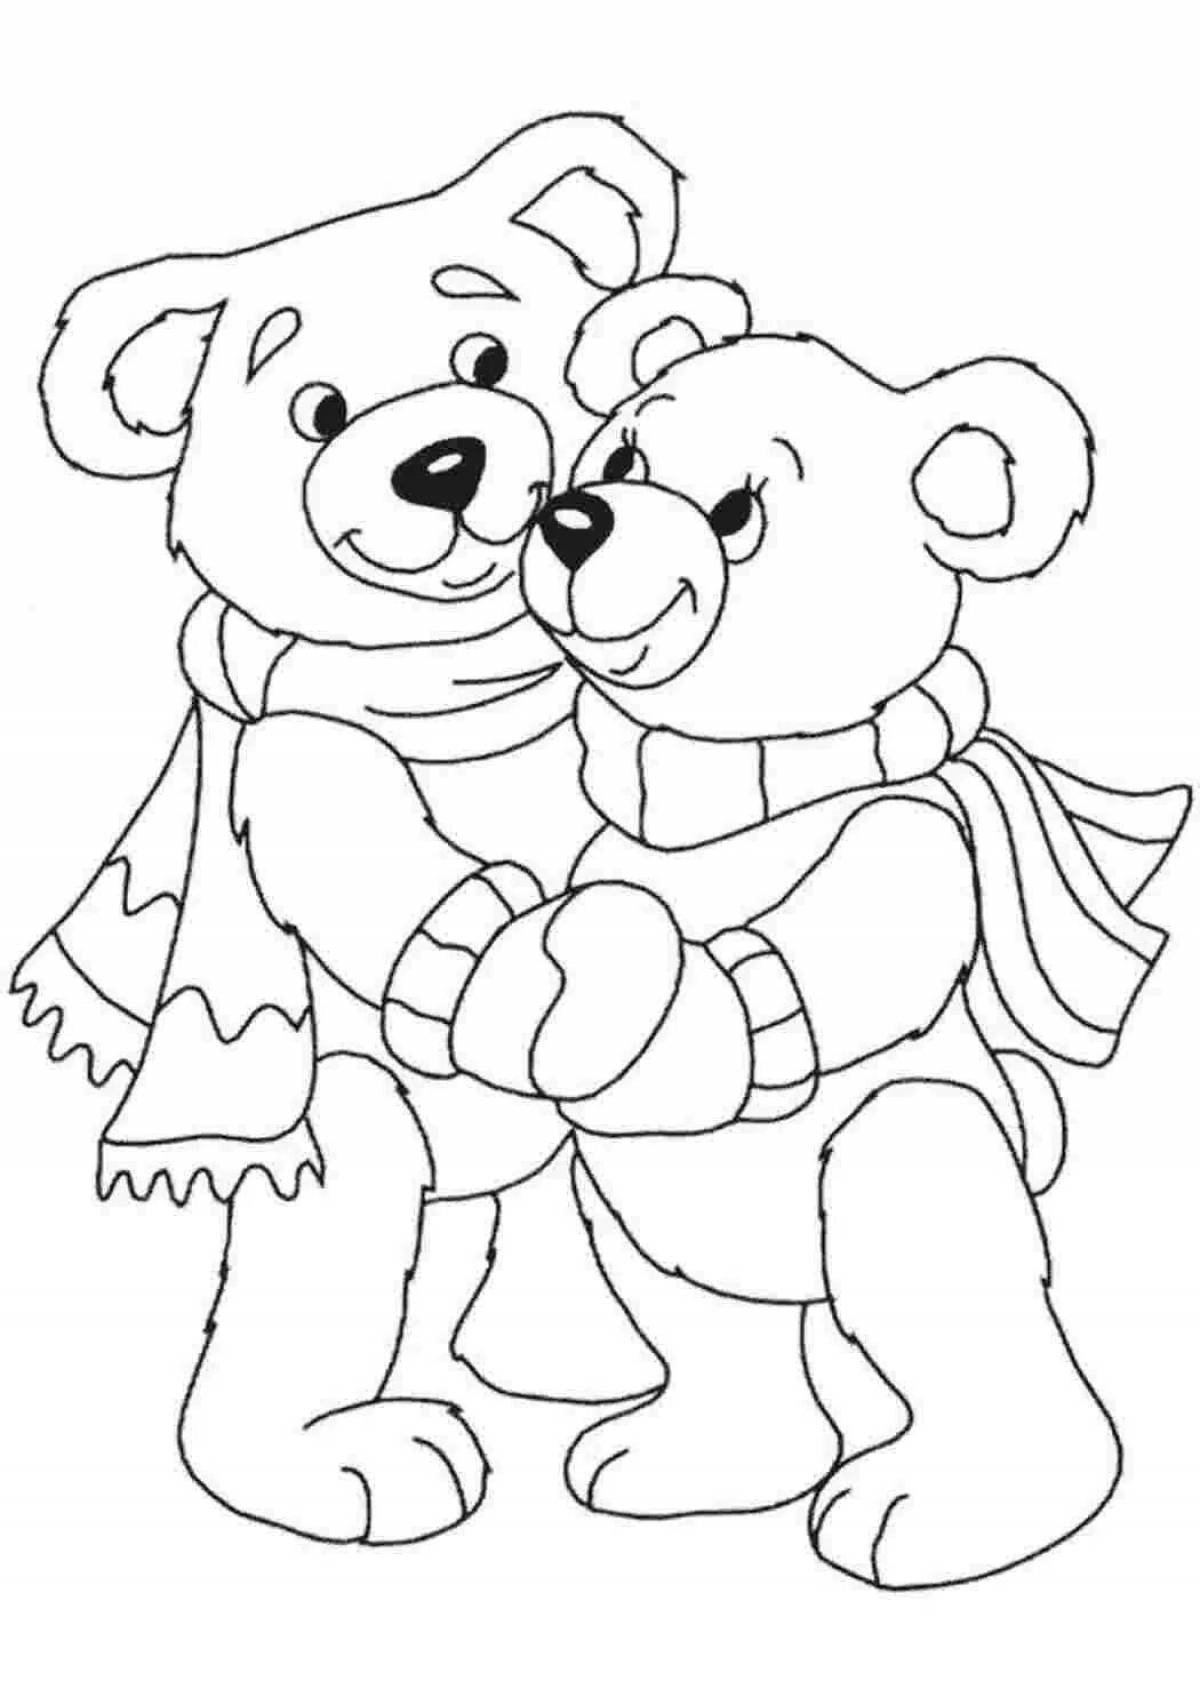 Hug day coloring for kids